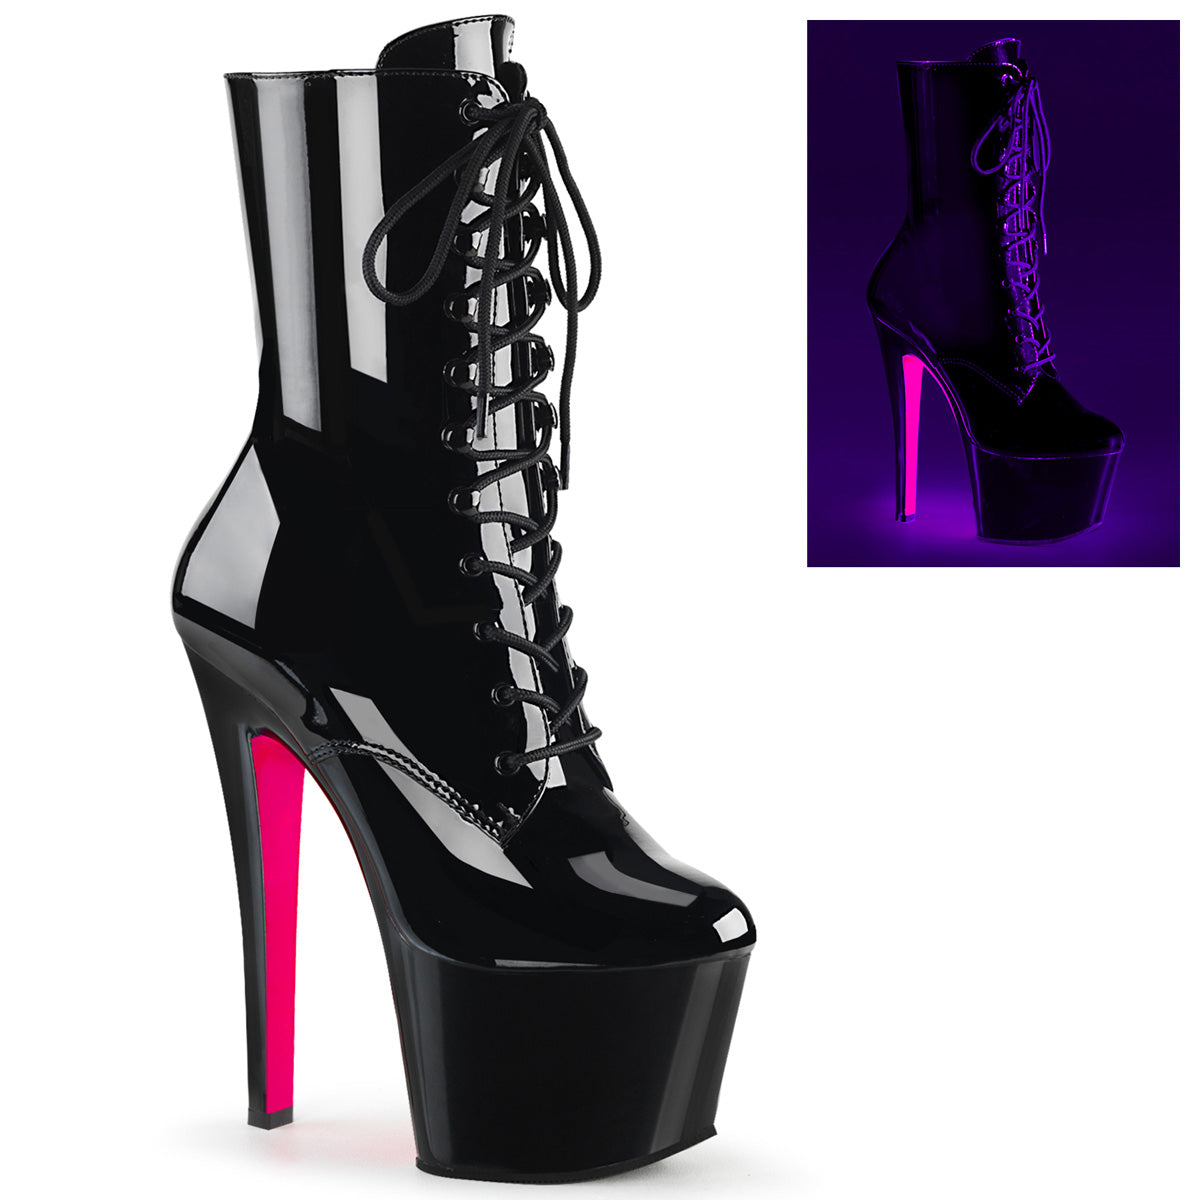 Sky-1020TT 7 "Heel Black Patent Hot Pink Pole Dancer Shoes